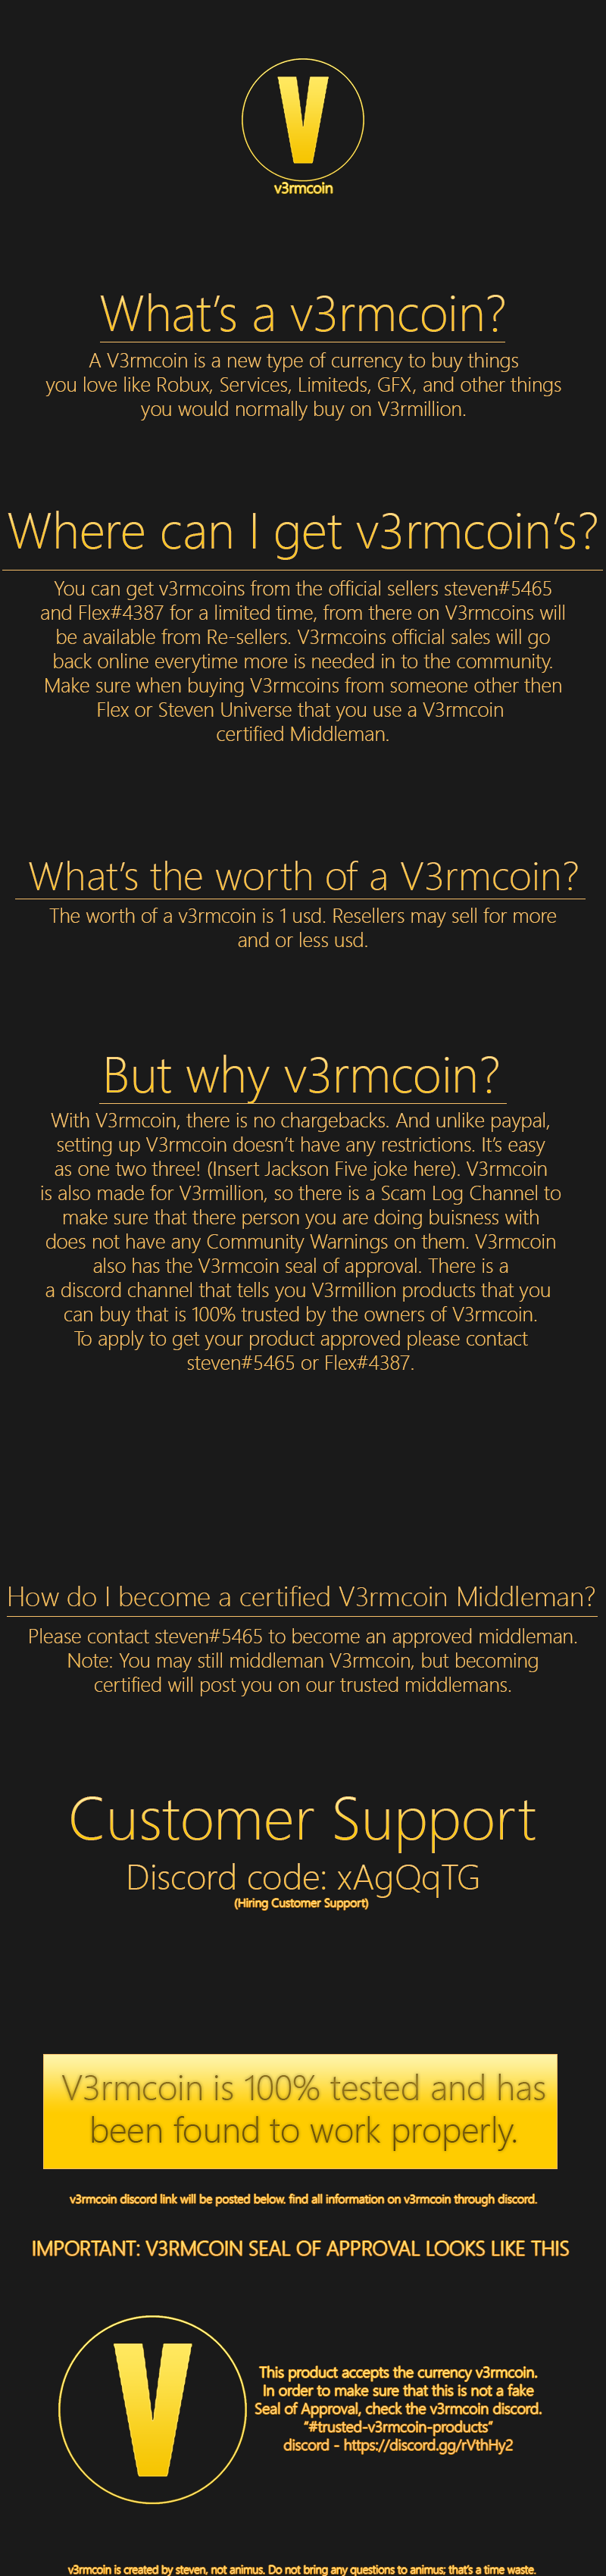 V3rmcoins Currency - v3million robux